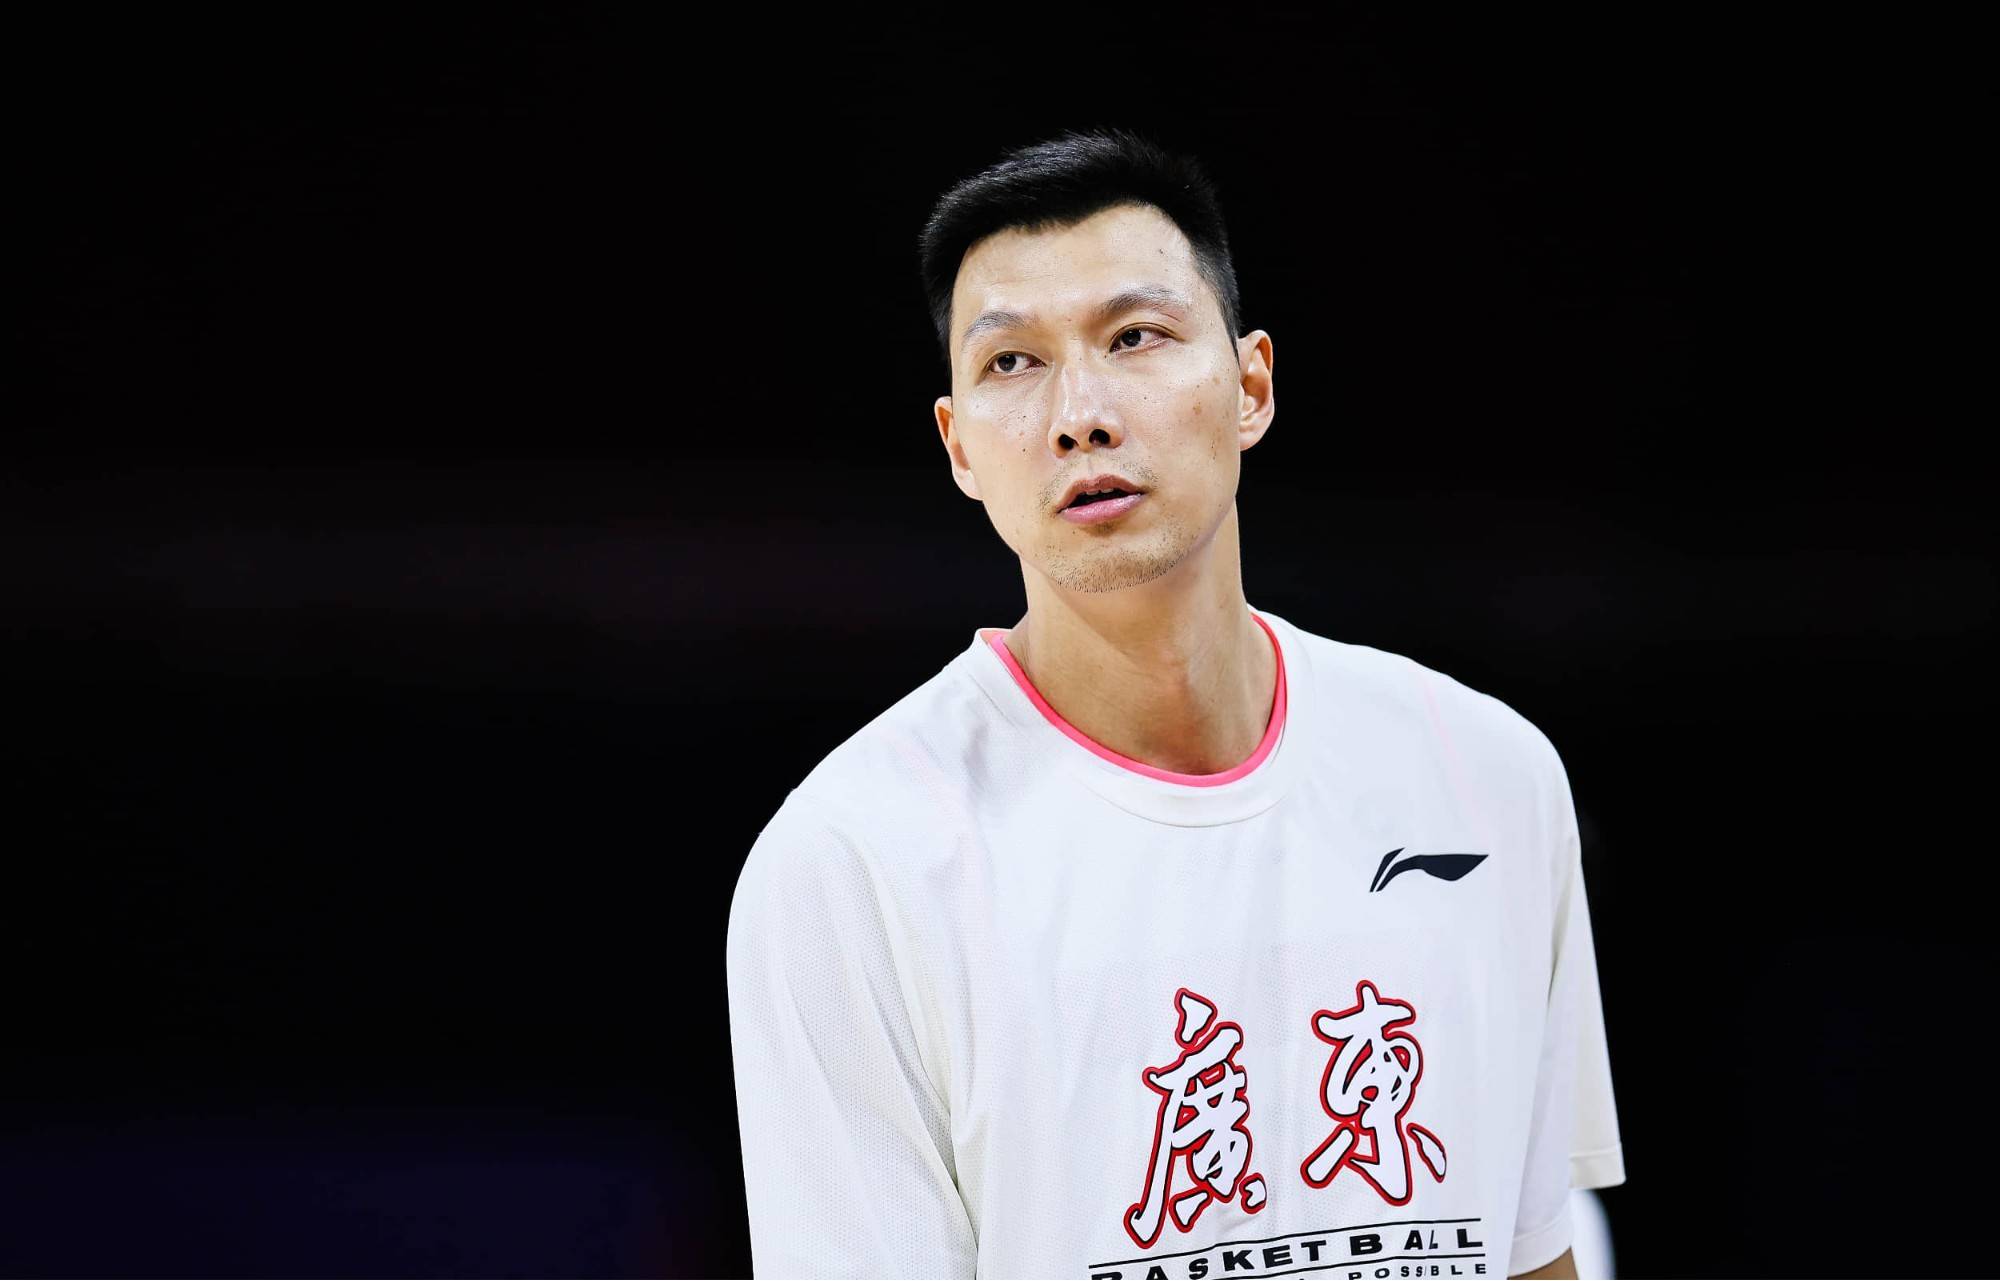 江 Yao Ming đã tham dự các phương tiện truyền thông bóng rổ của Jiangsu Enterprise: Tôi hy vọng hiệp hội bóng rổ sẽ hỗ trợ nhiều hơn cho Liên đoàn Trung Quốc 